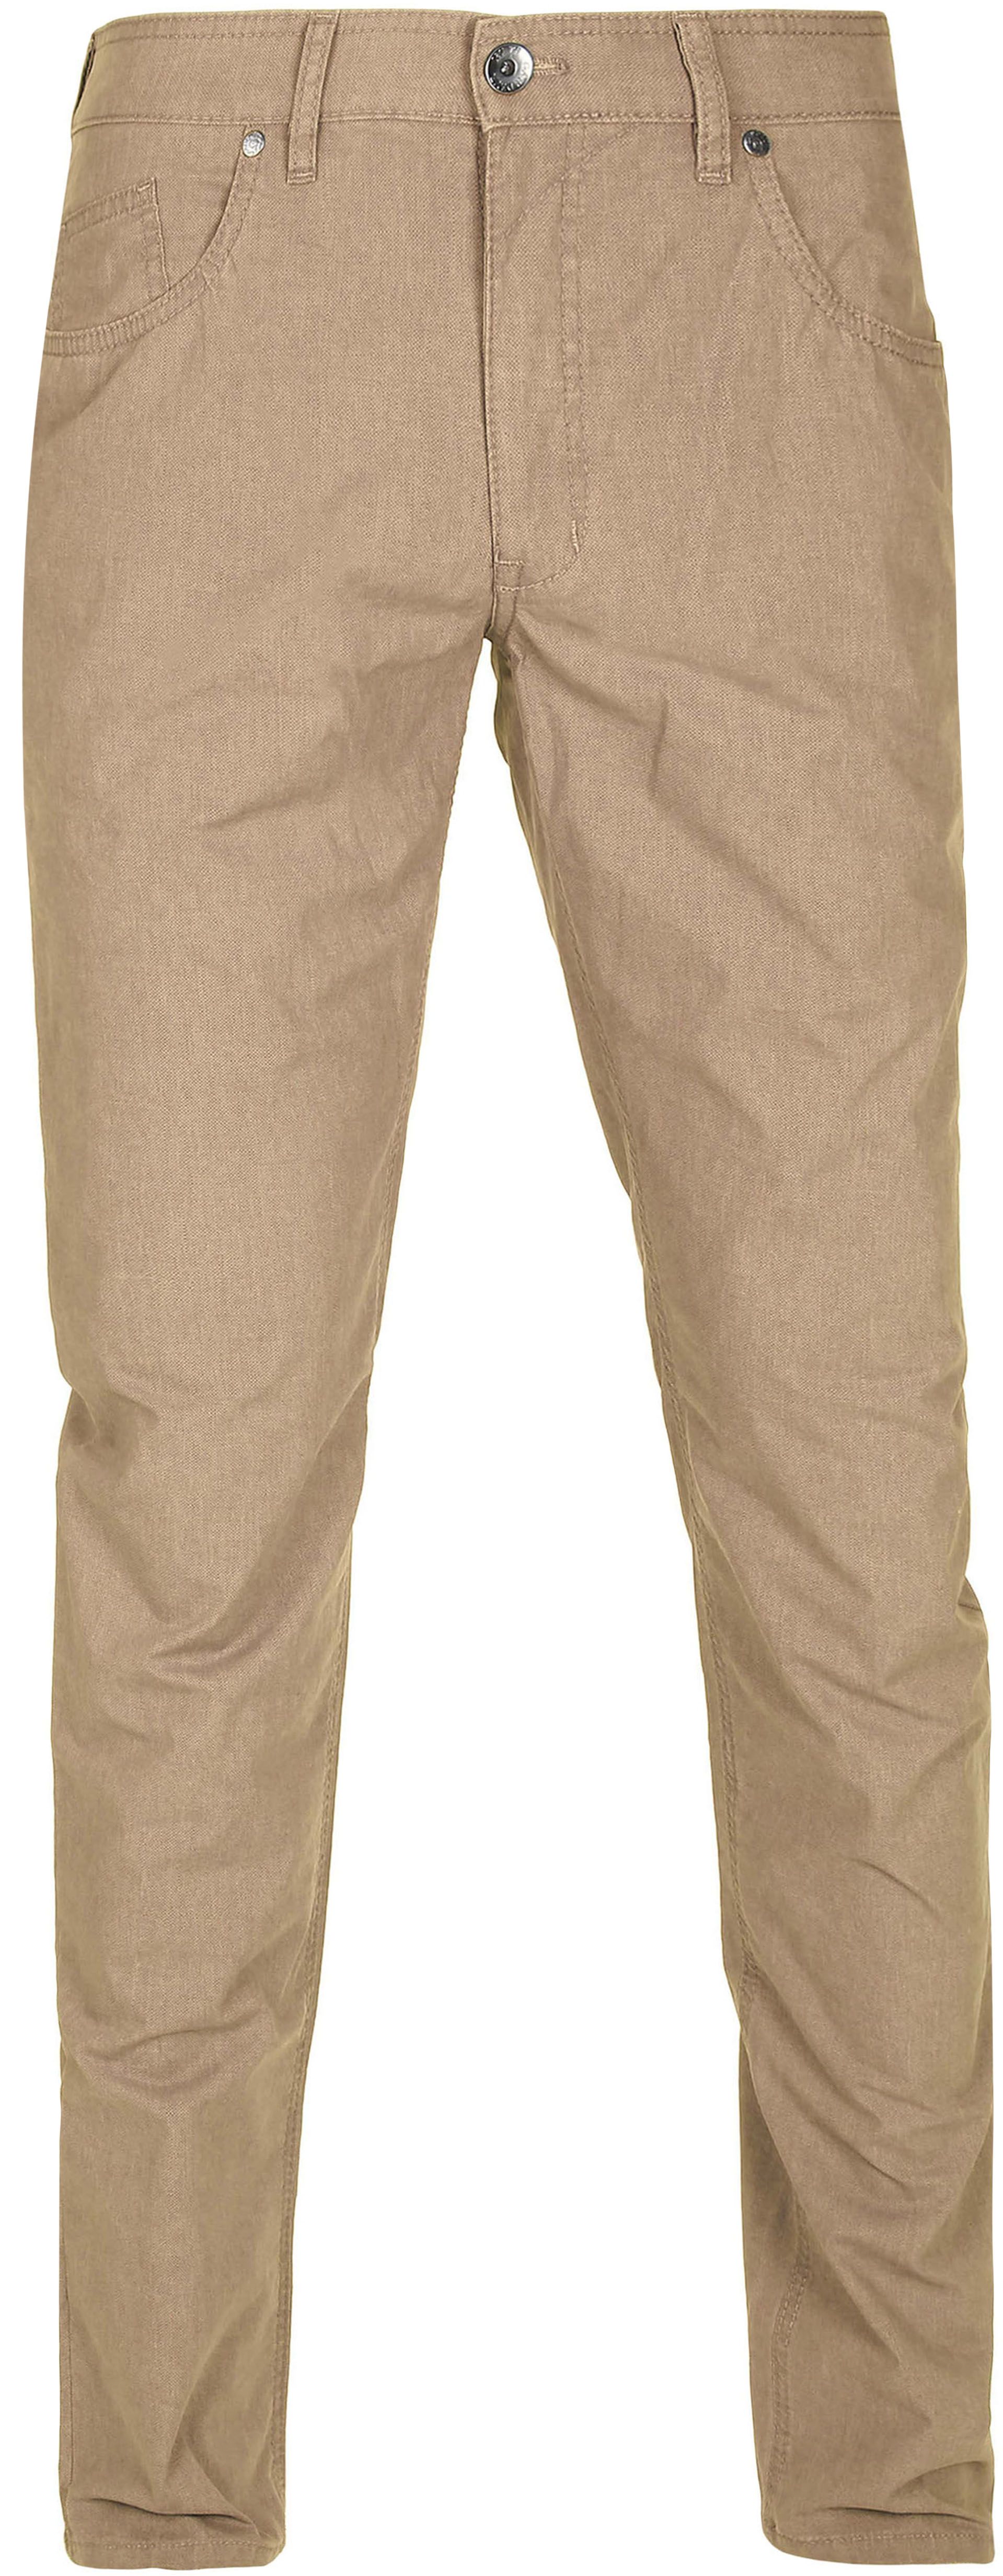 Gardeur Jeans Bill 2 Camel Brown size W 38